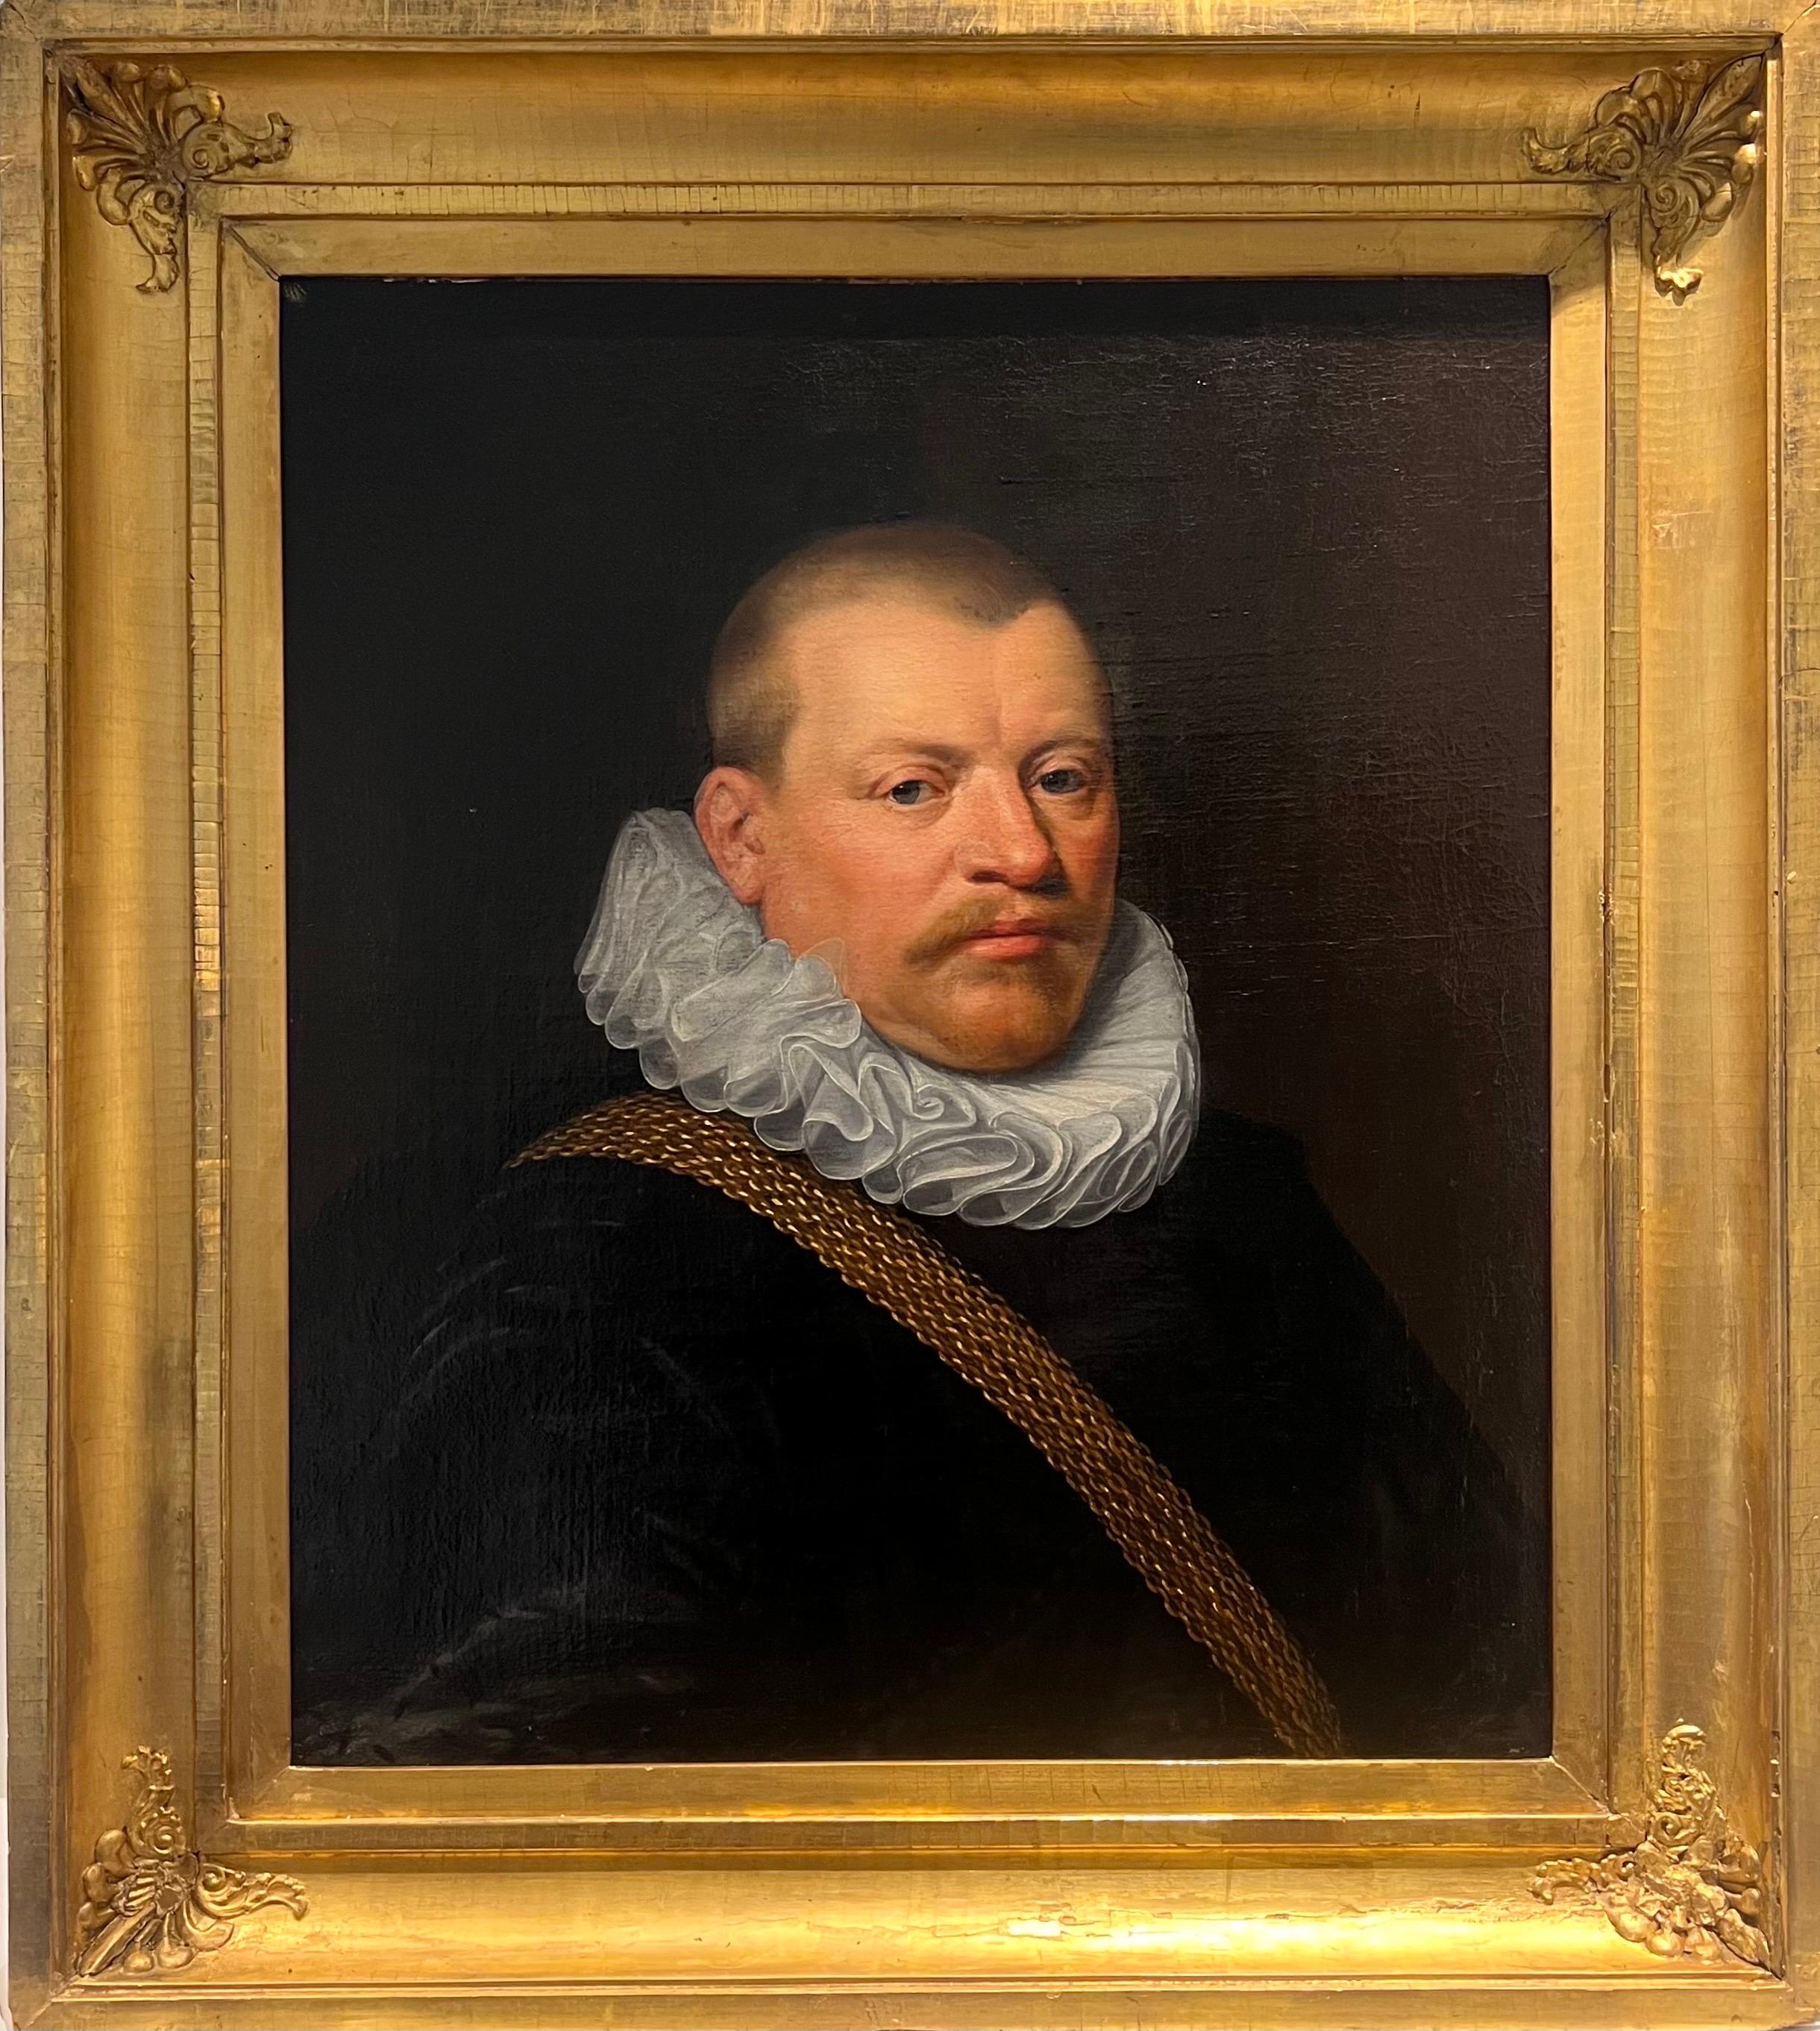 17th century Dutch Old Master Portrait of Jacob de Rycken - Dutch golden age - Painting by Jan van Ravesteyn